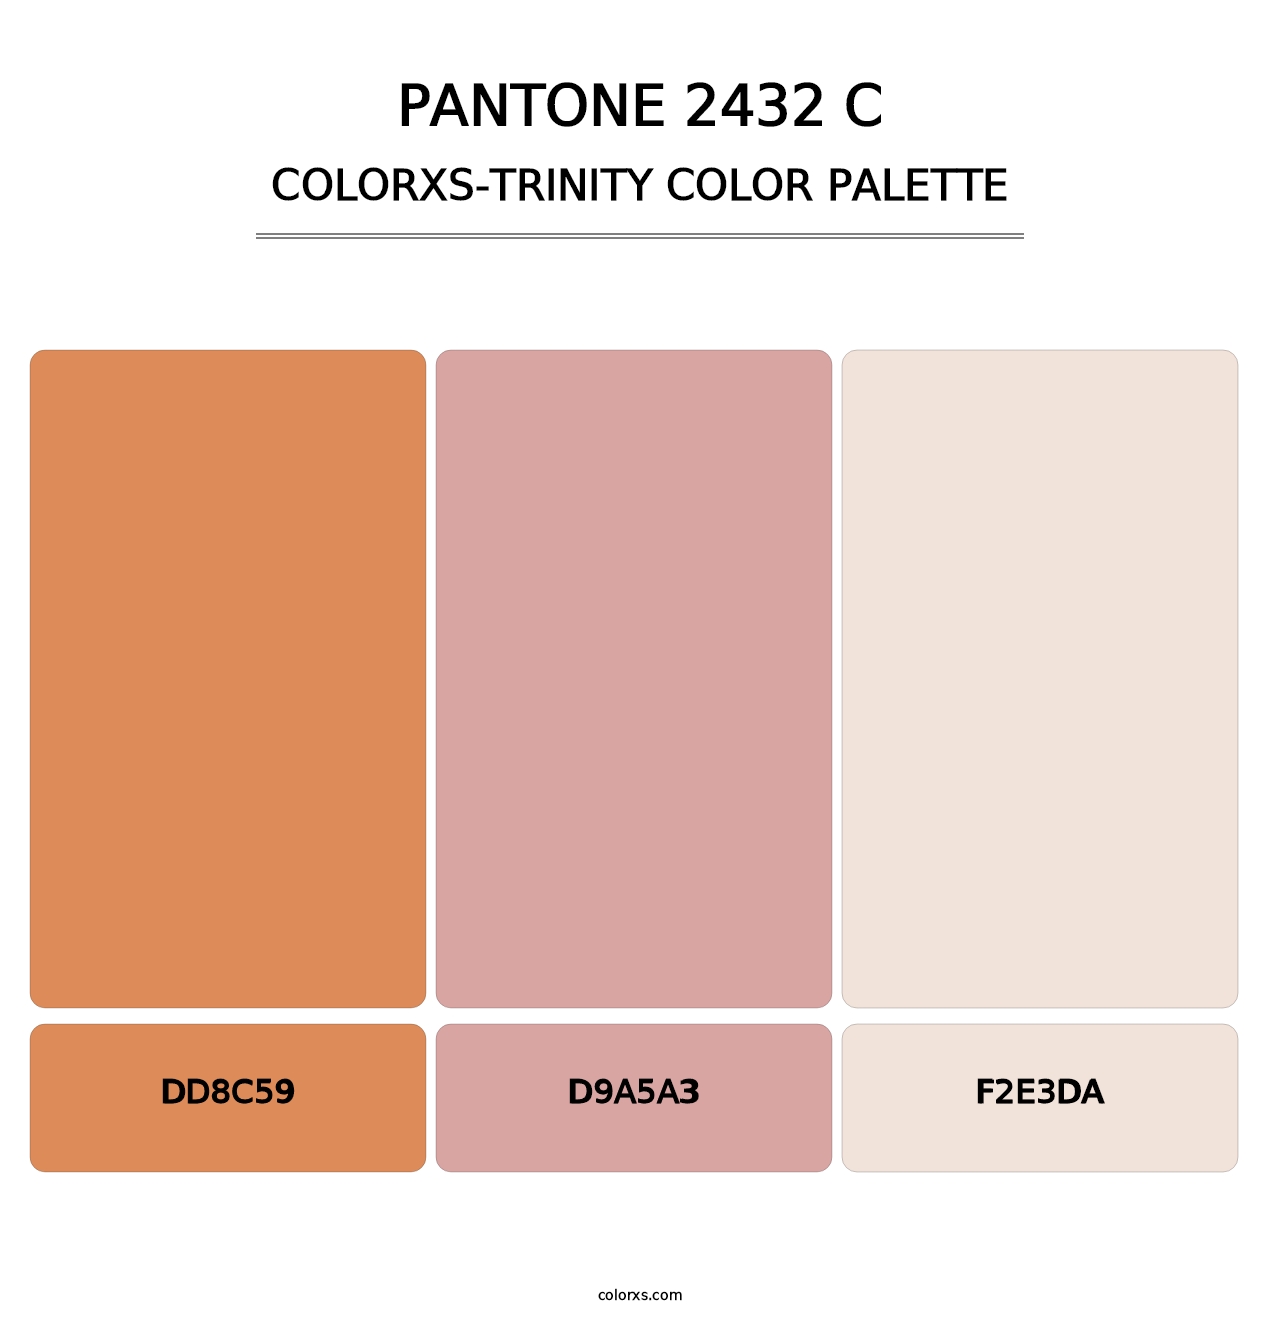 PANTONE 2432 C - Colorxs Trinity Palette